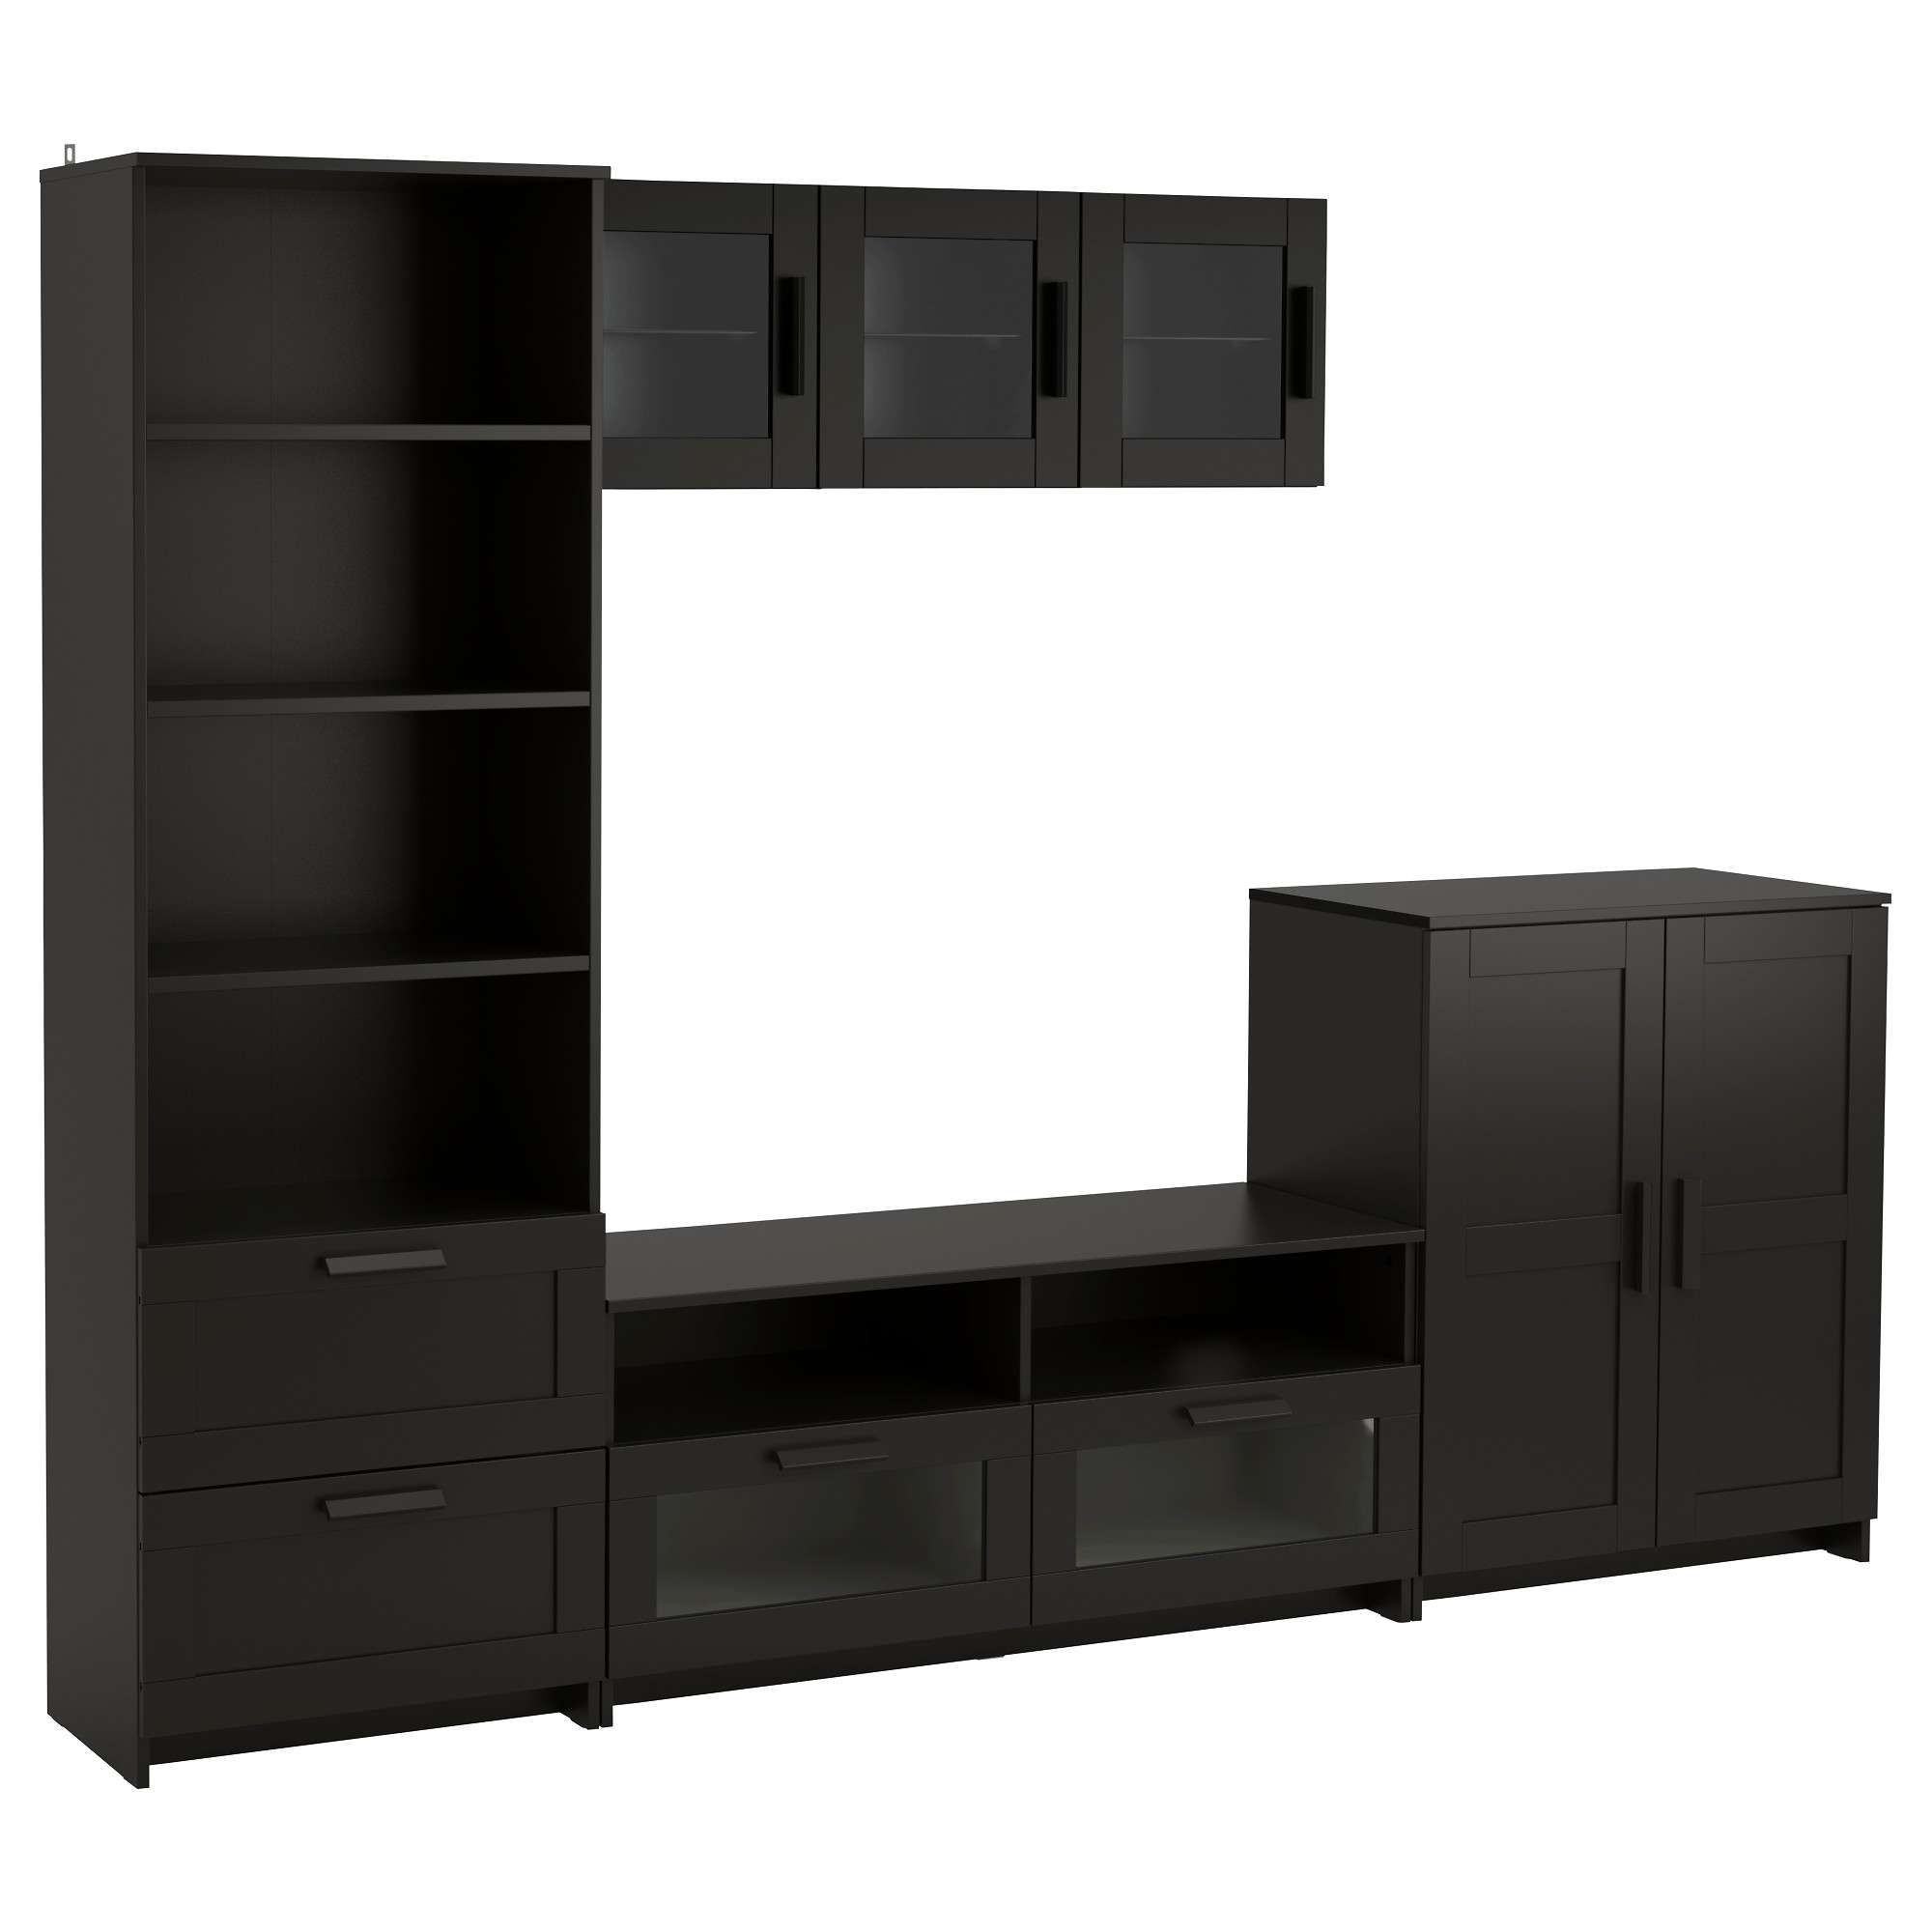 Brimnes Tv Storage Combination Black 260x41x190 Cm – Ikea Inside Tv Cabinets With Storage (Gallery 1 of 20)